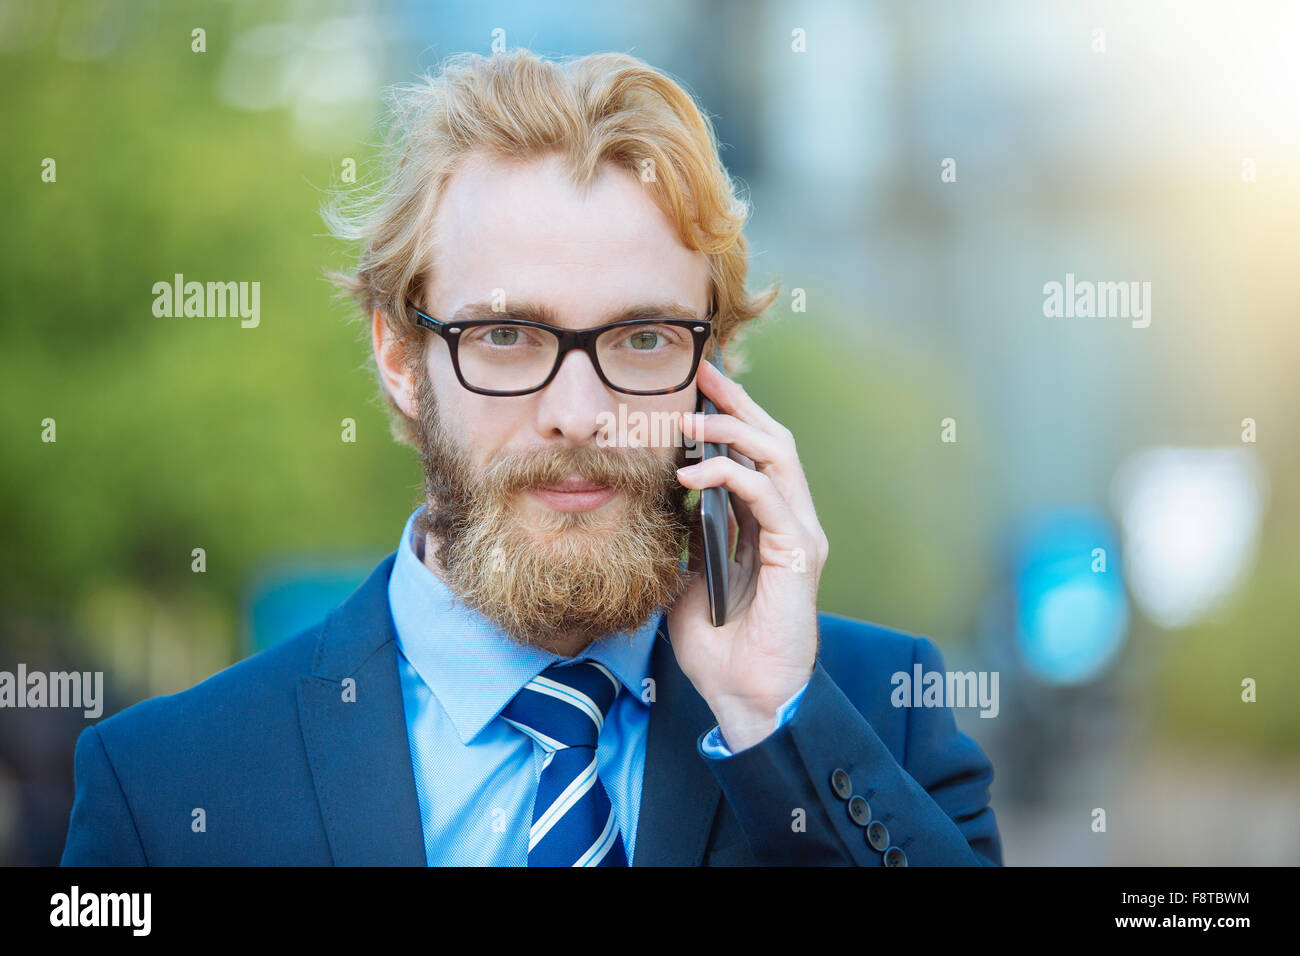 Businessman using a mobile phone Banque D'Images